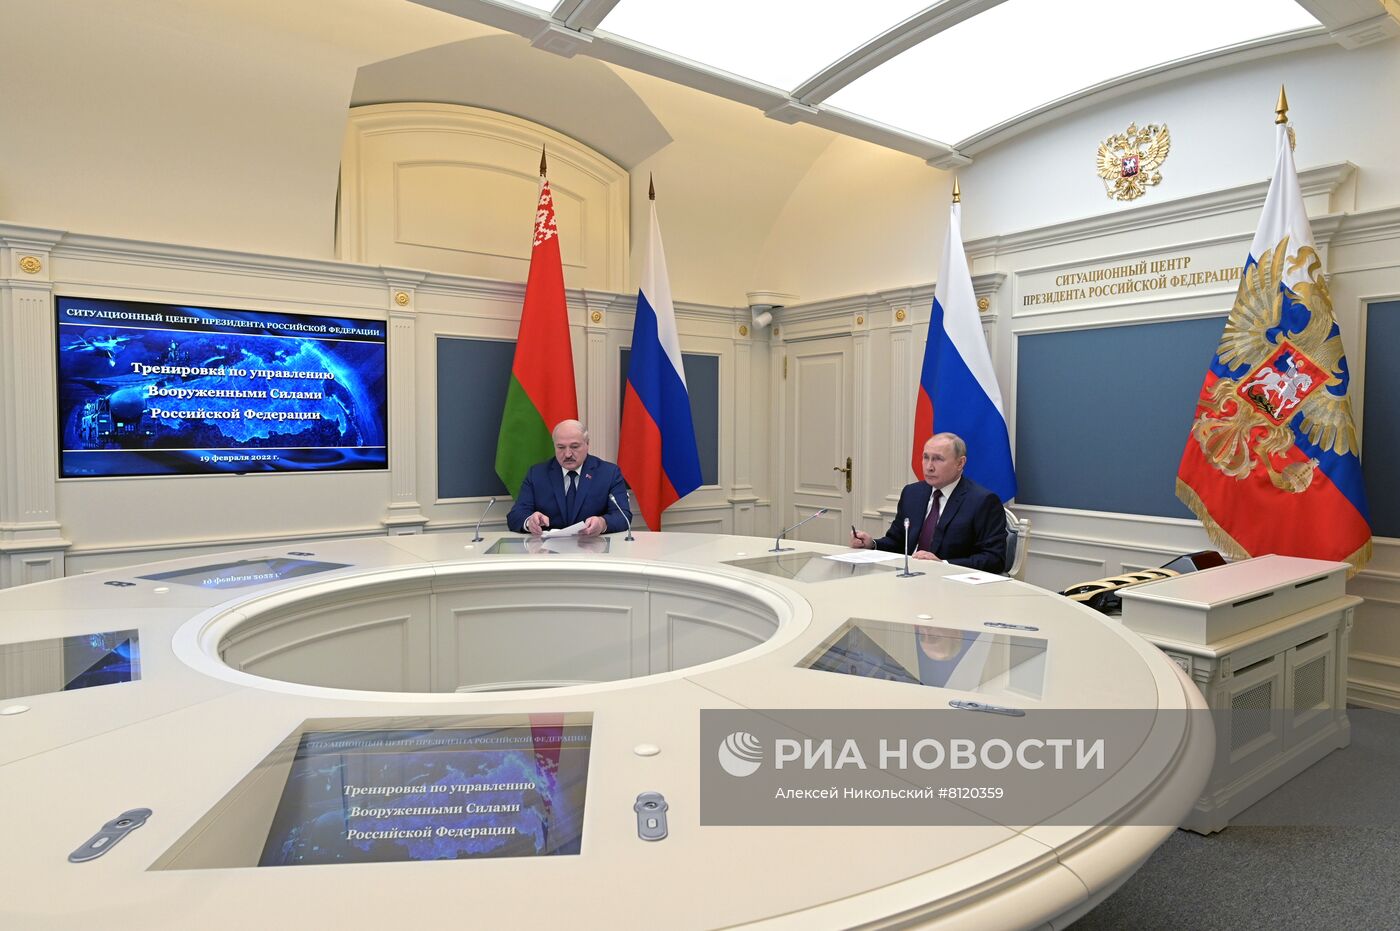  Президент РФ В. Путин дал старт учениям сил стратегического сдерживания с пусками баллистических ракет